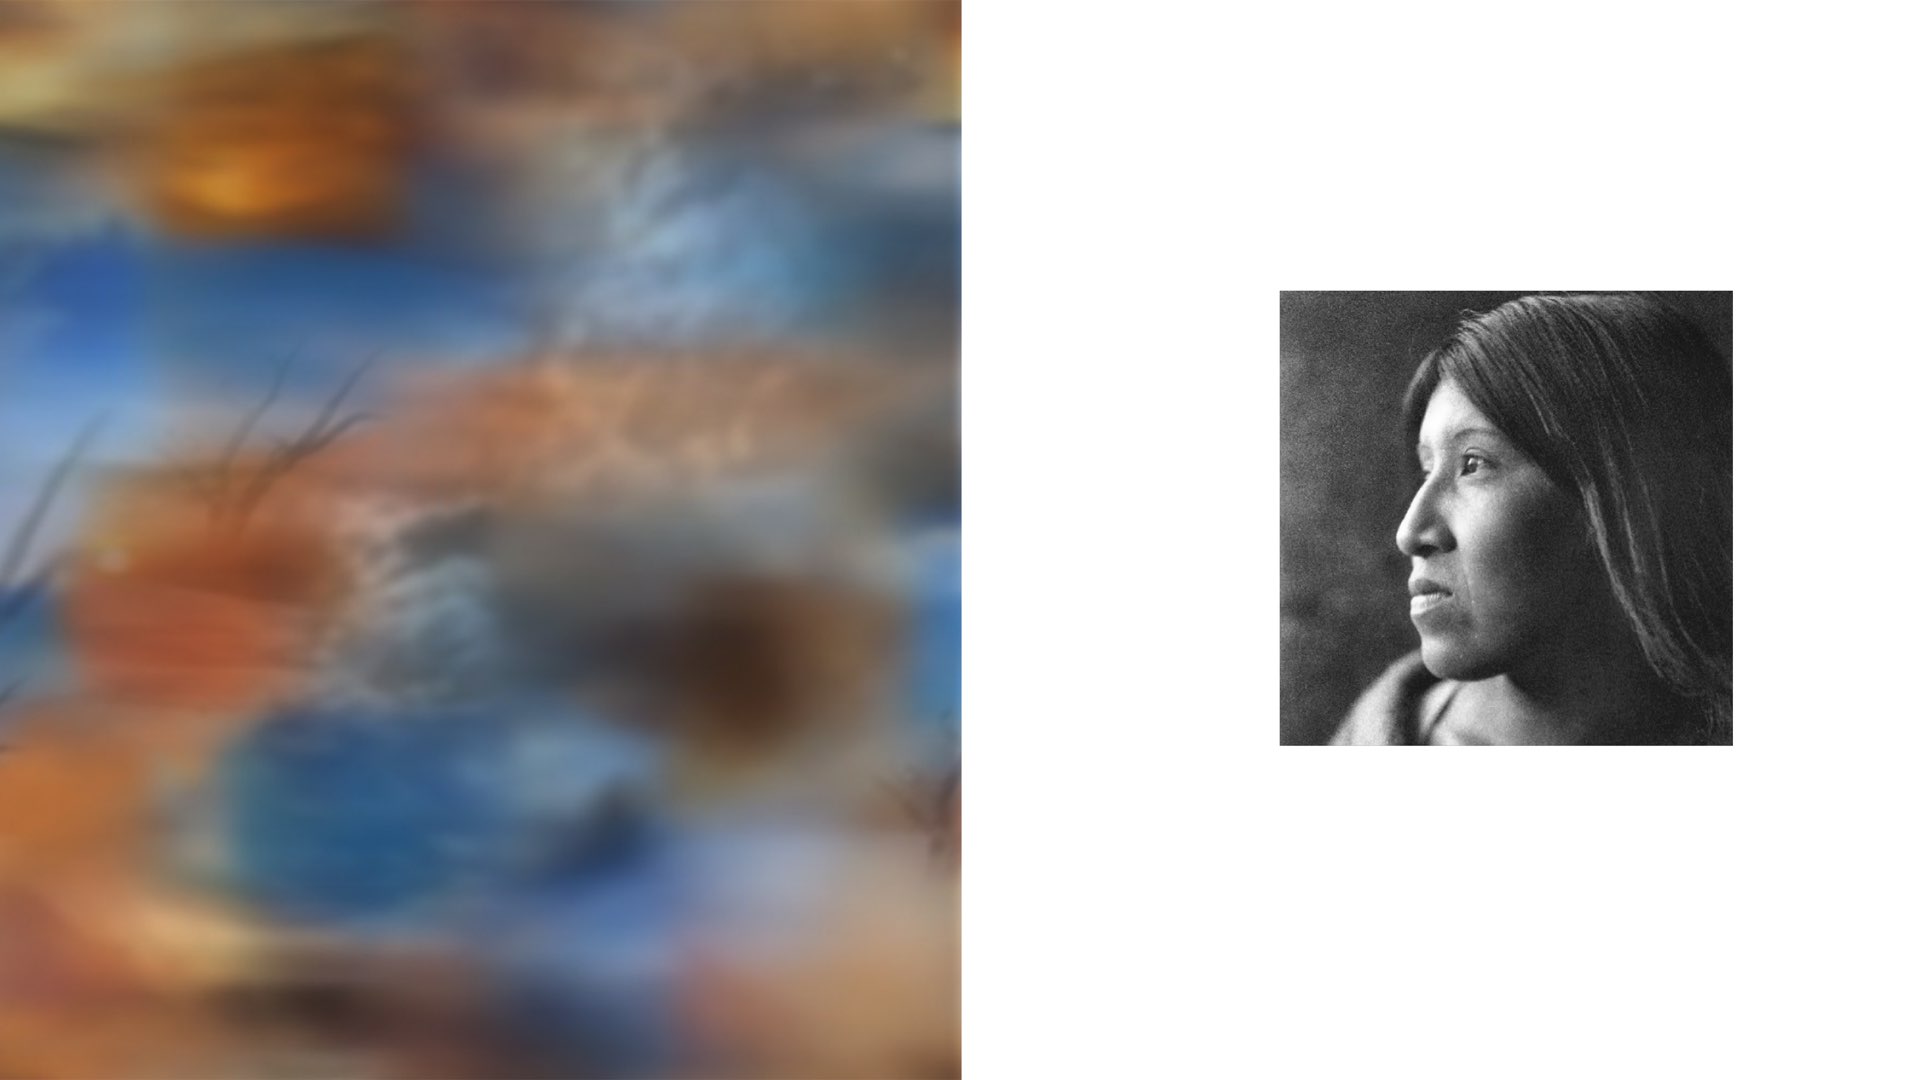 Artist Maja Petrić used machine learning algorithms to create this sky graphic, shown alongside a portrait of woman